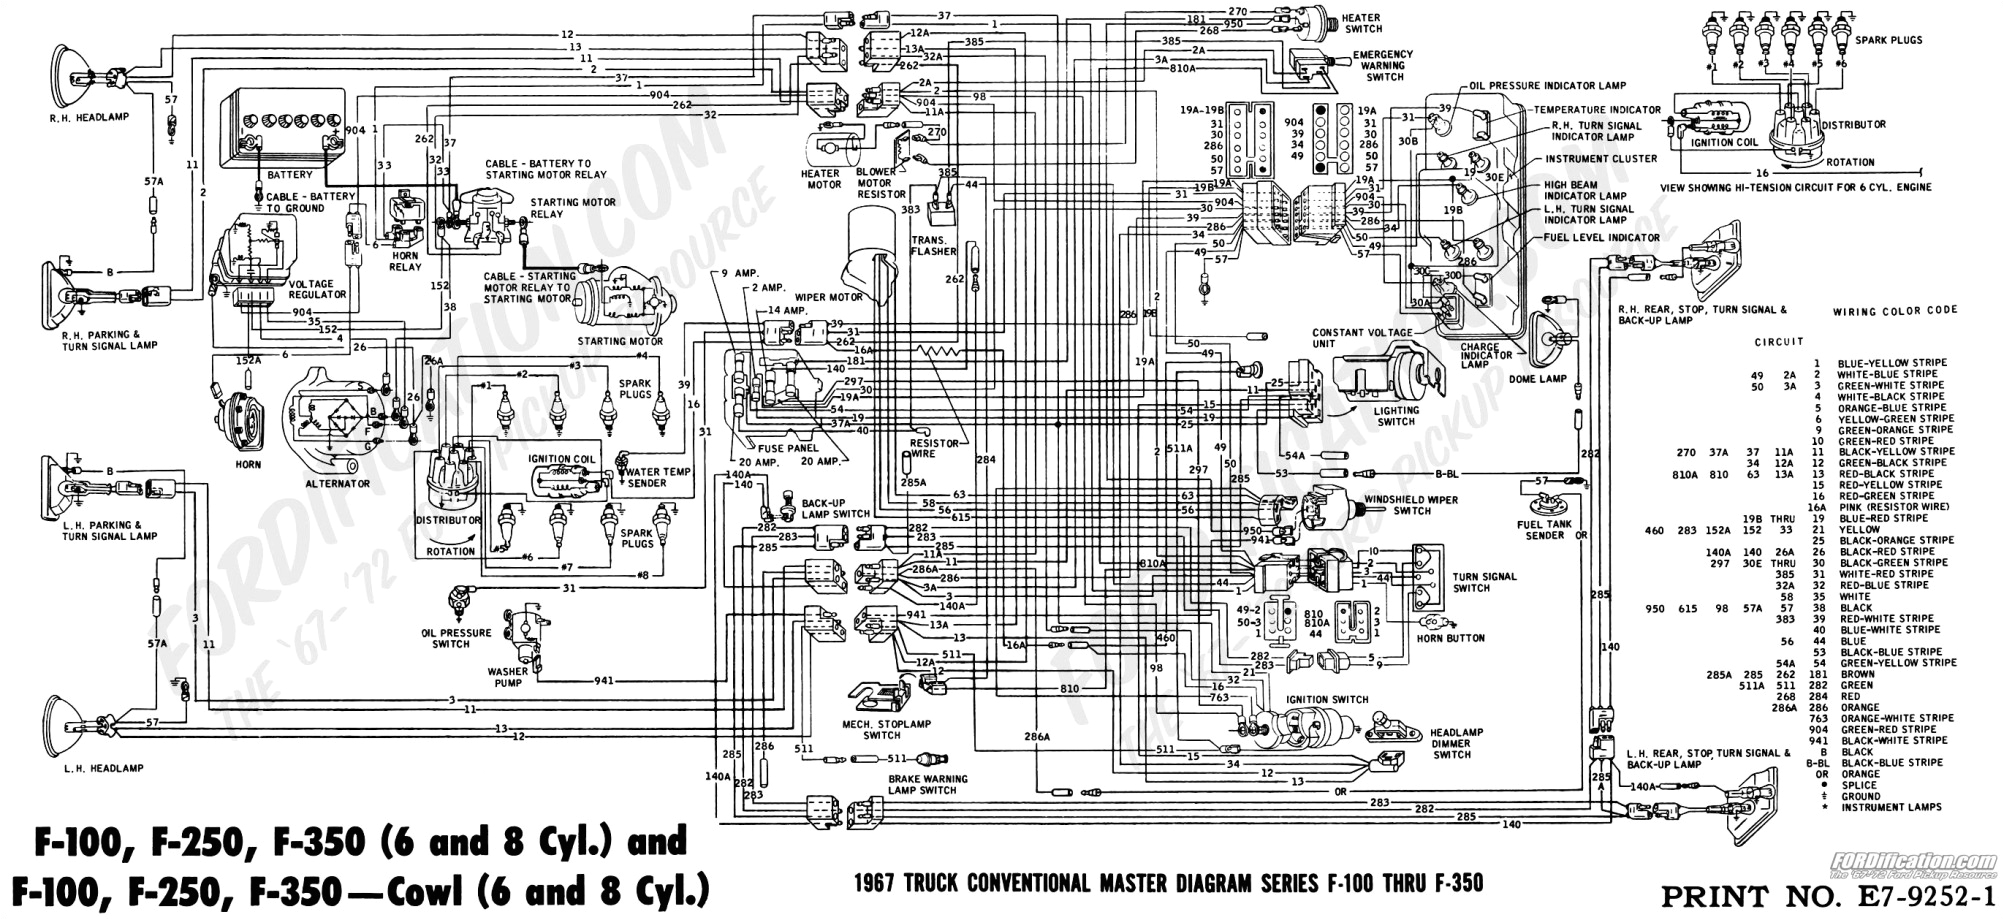 1986 ford F150 Wiring Diagram 1986 ford F 150 Headlight Wiring Wiring Diagram Val